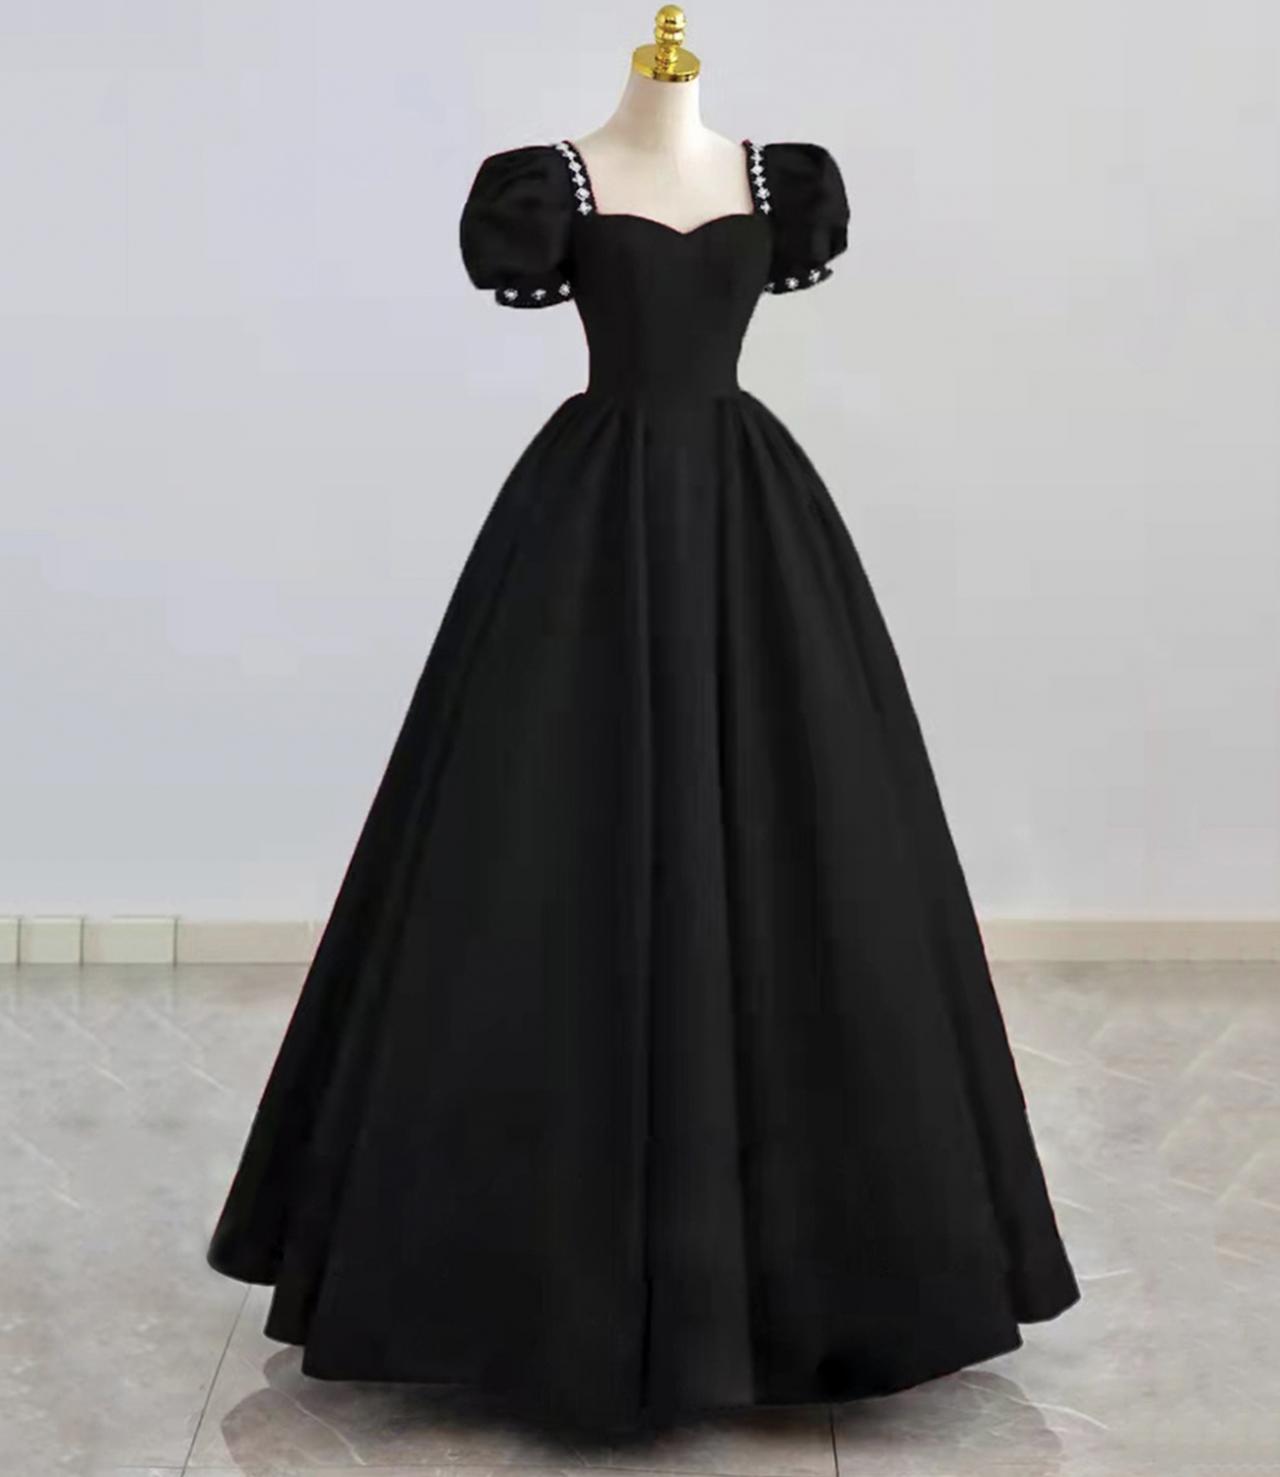 Black Satin Long Prom Dress A Line Evening Dress